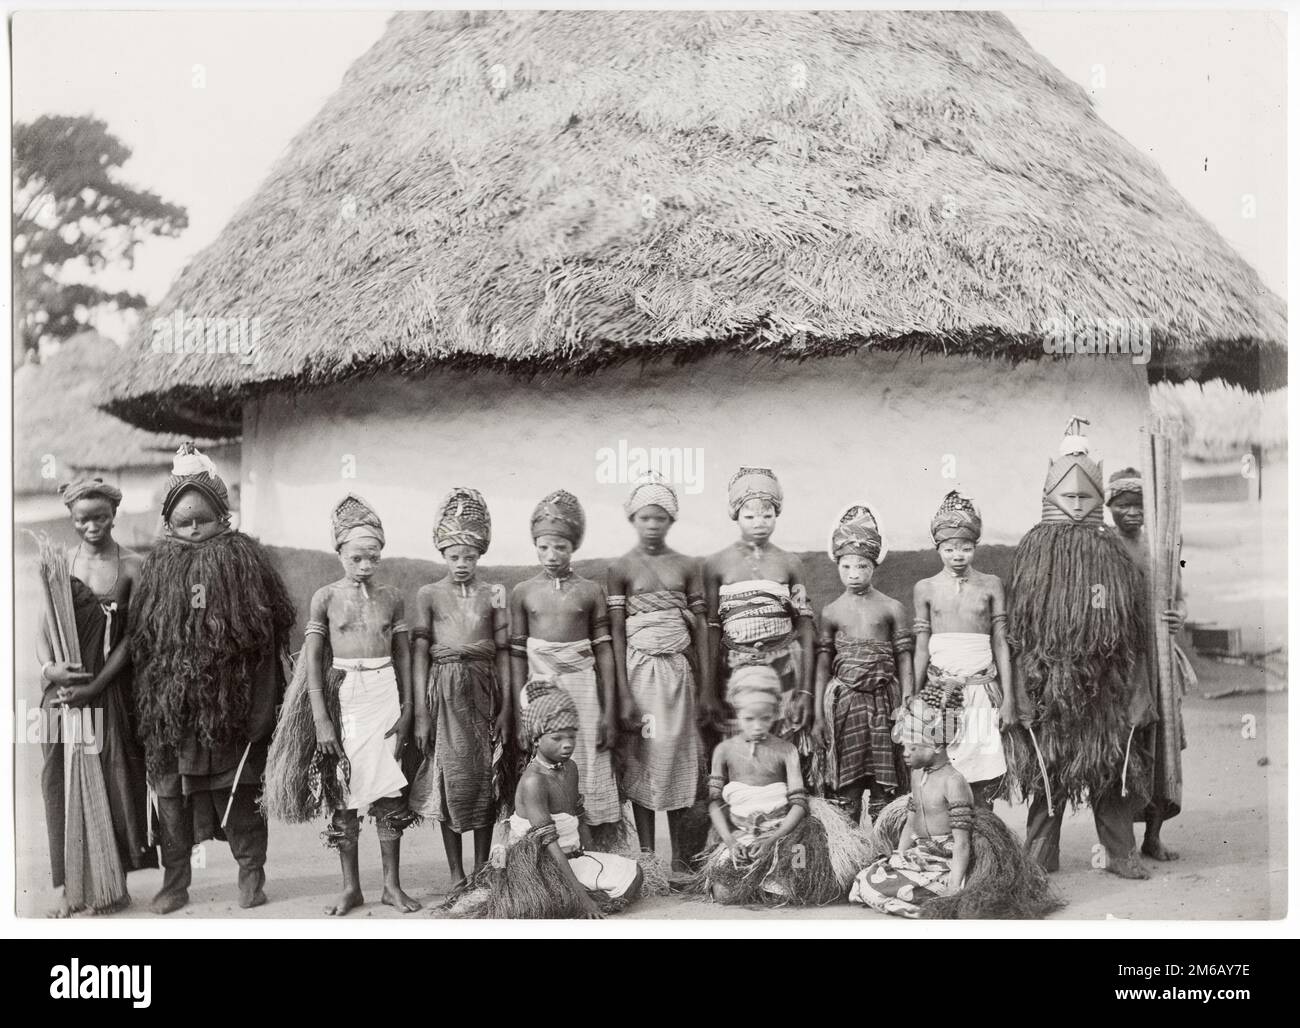 Alphonso Lisk-Carew studio: c.1910 West Africa Sierra Leone - Bundo bundu group, Sande society Stock Photo